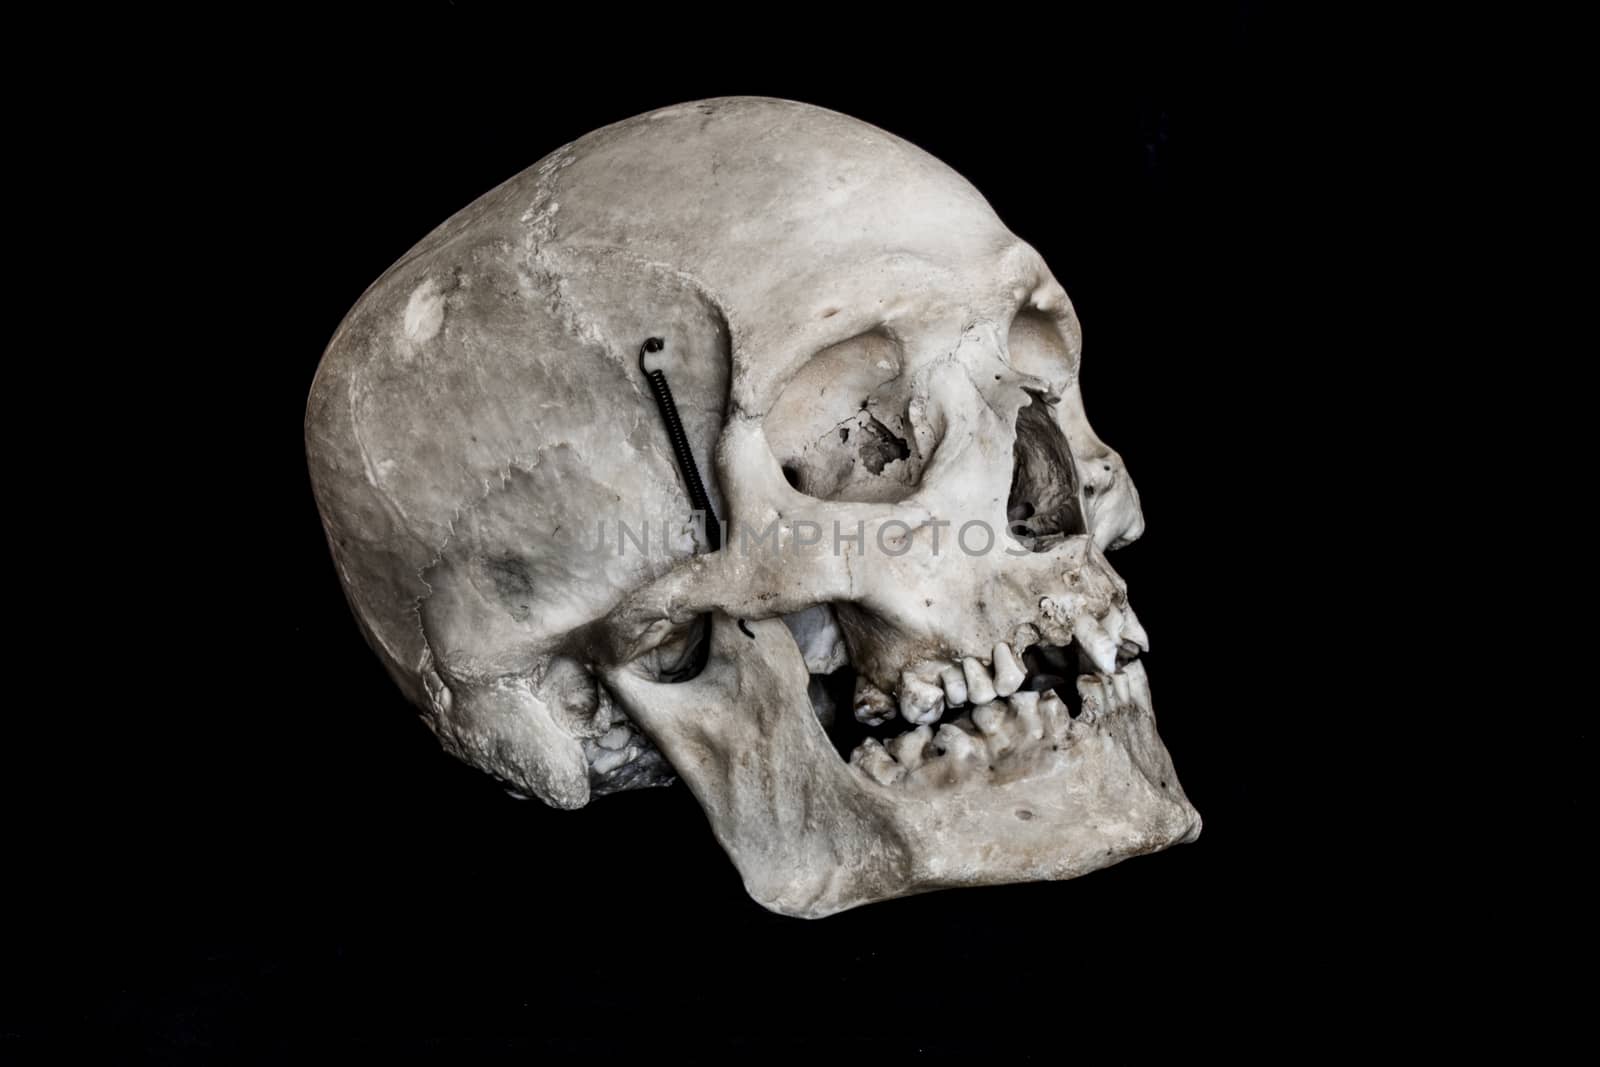 Real human skull on black background by bluiten